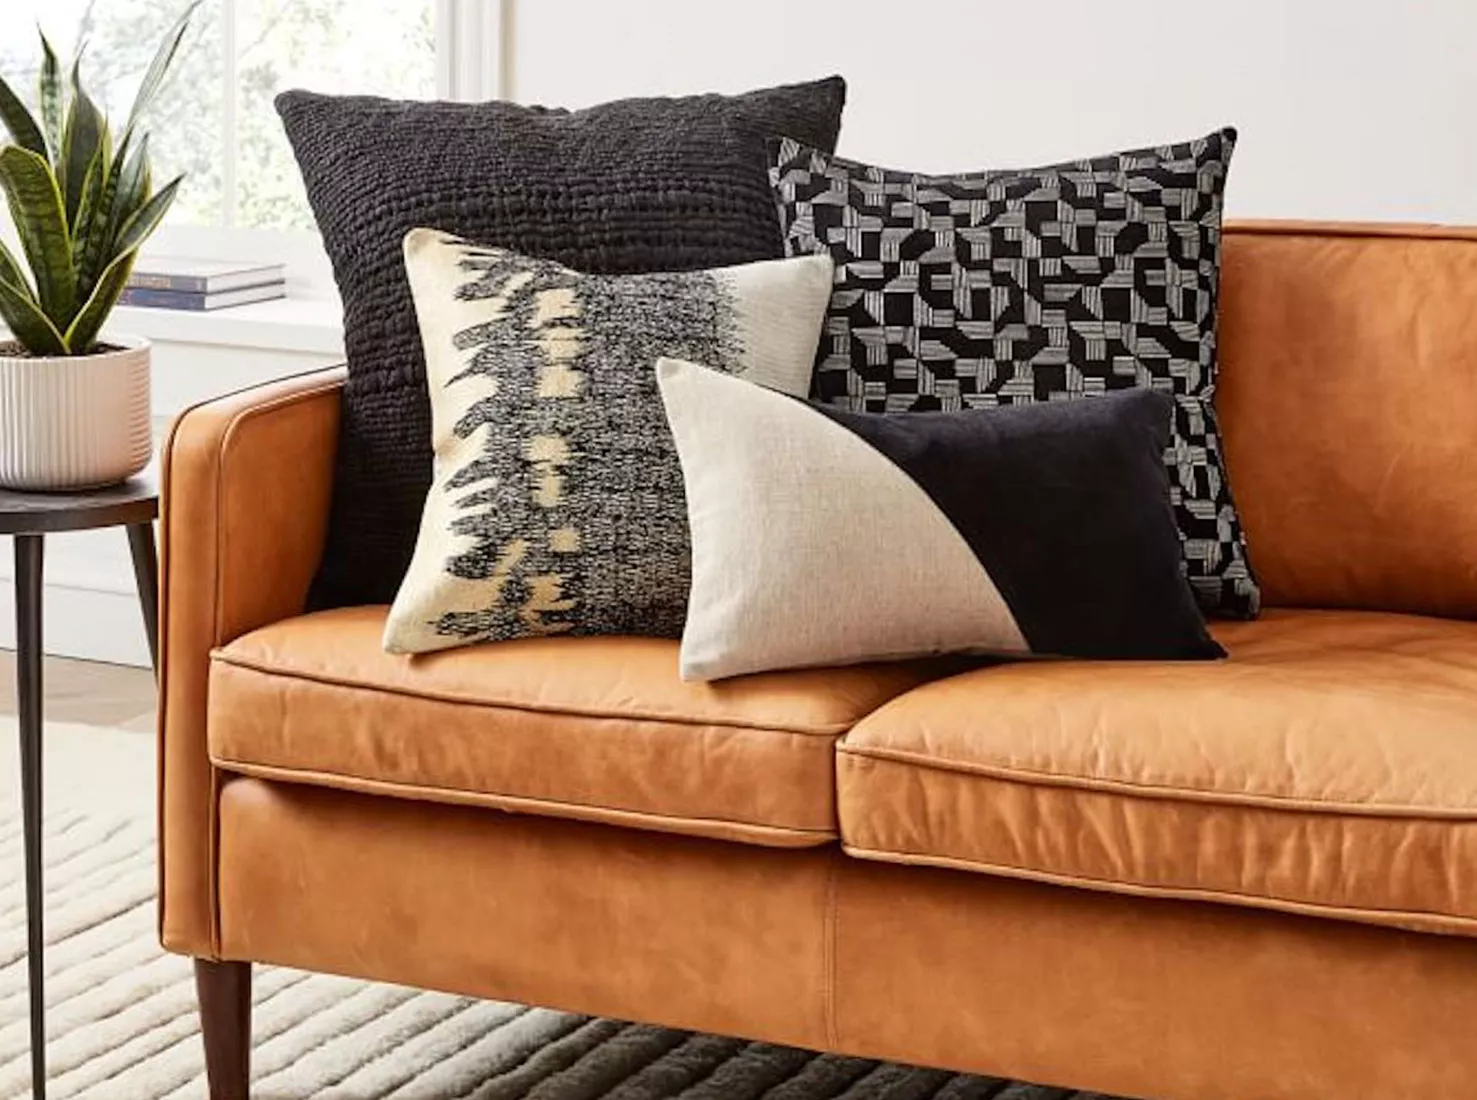 How To Make An Uncomfortable Sofa More